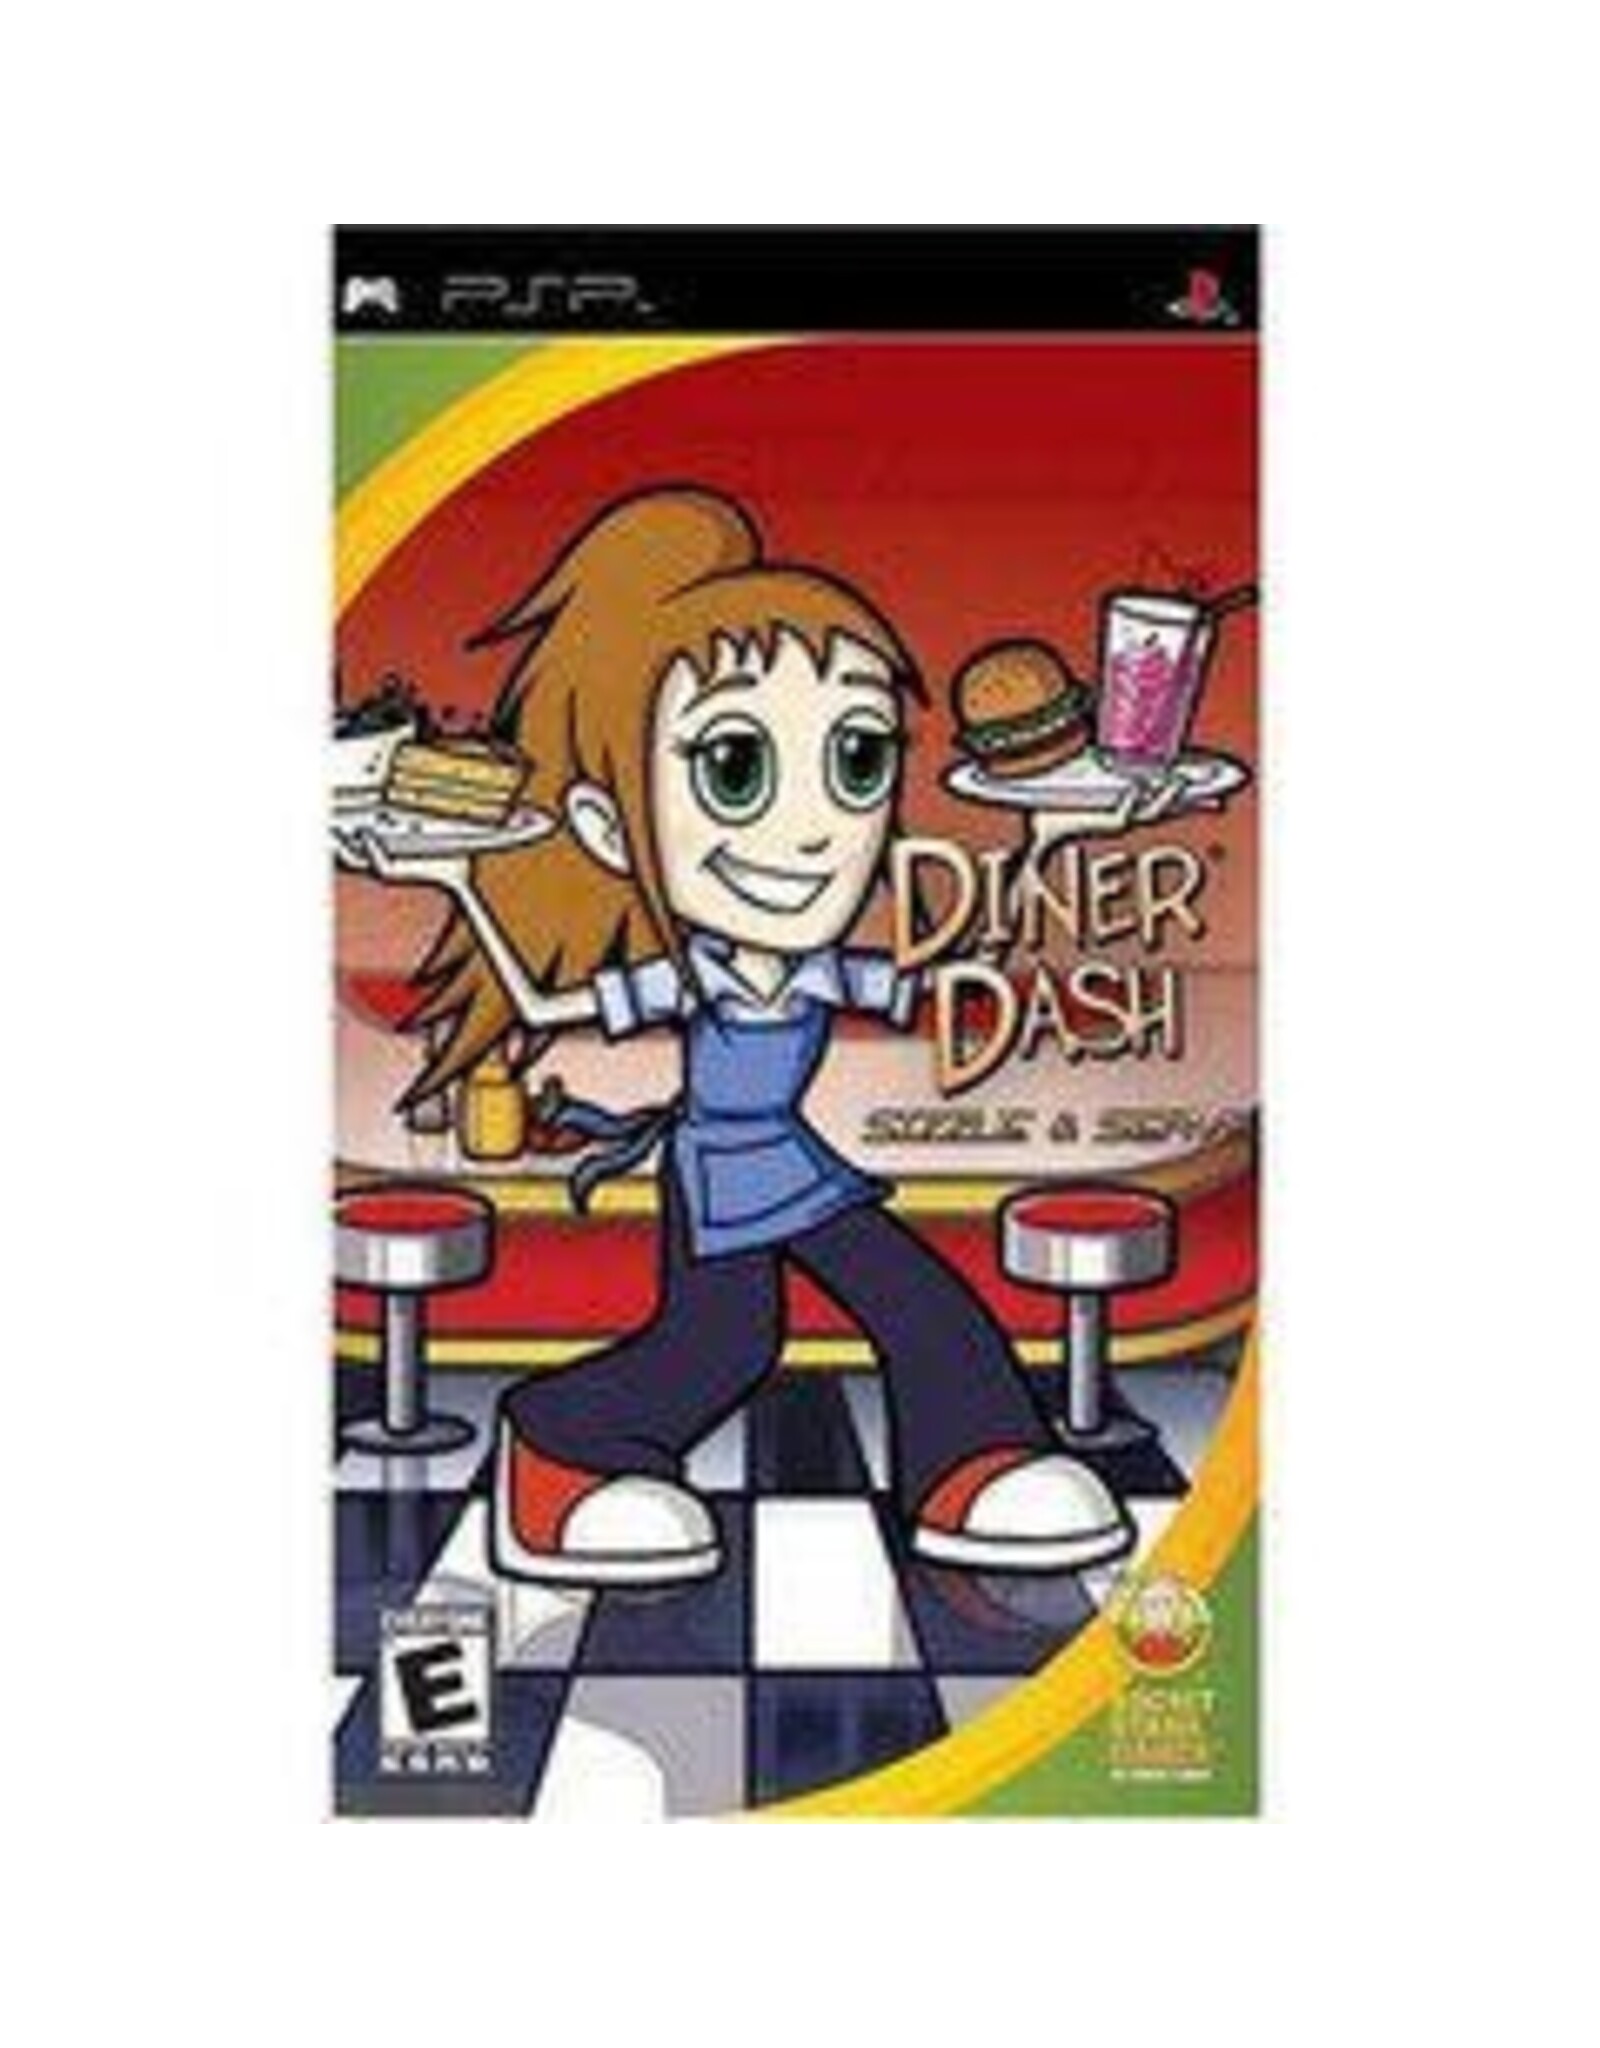 PSP Diner Dash Sizzle and Serve (UMD Only)